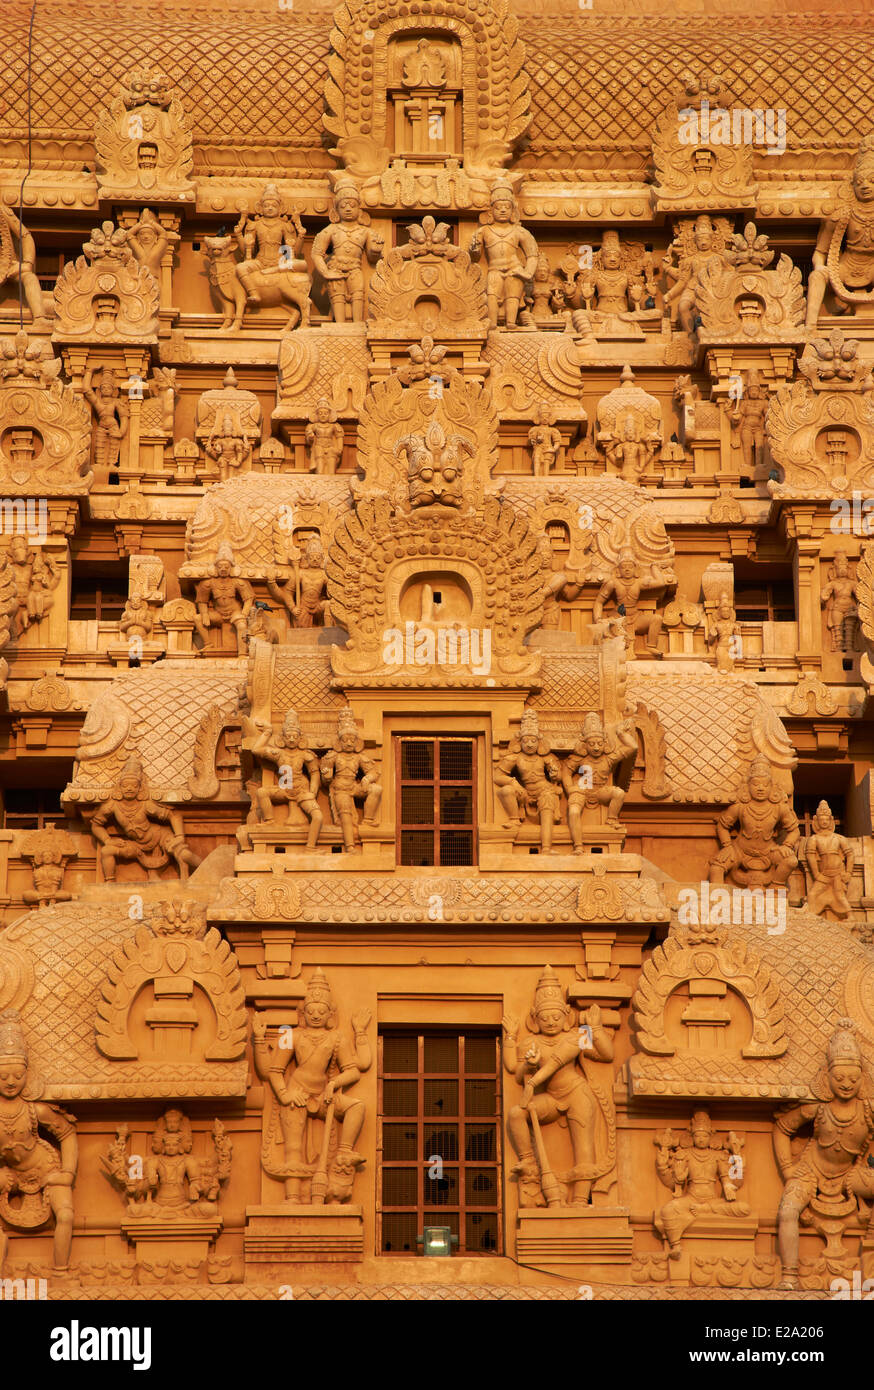 India Tamil Nadu State Thanjavur Tanjore Brihadisvara Temple